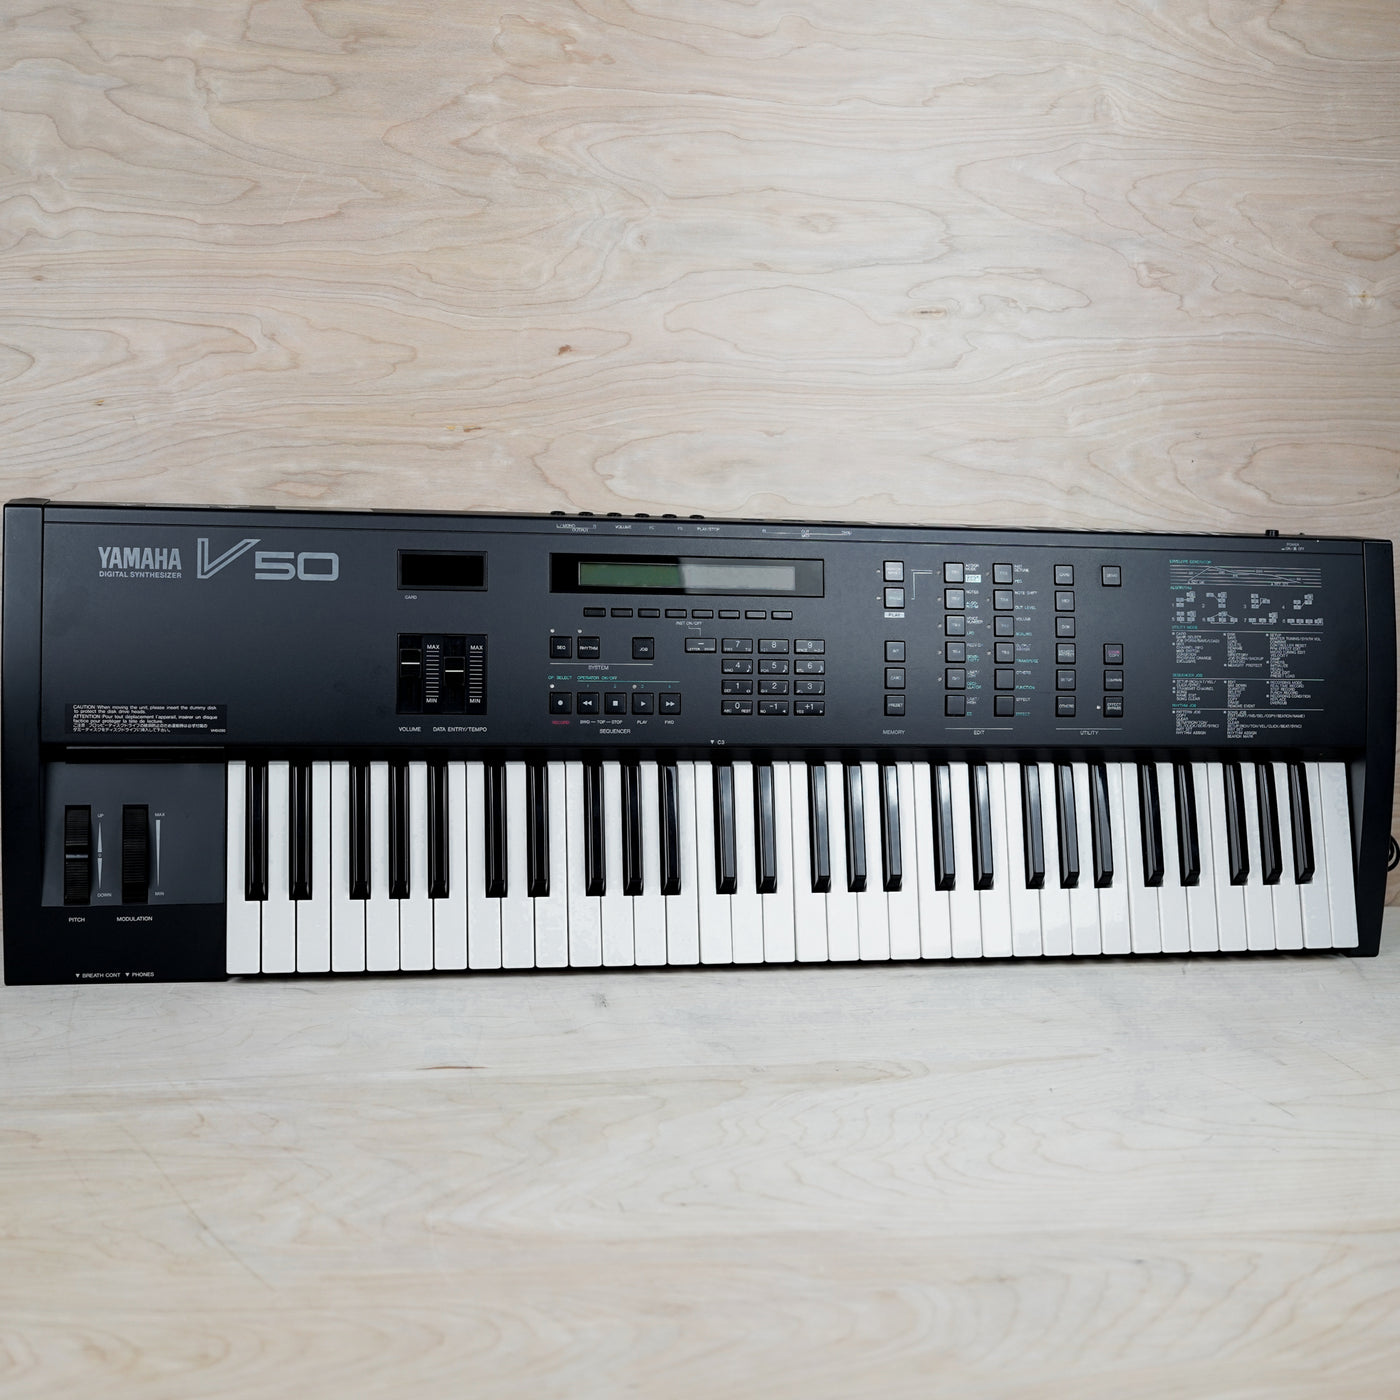 Yamaha V50 FM Synthesizer 61 Key 100V Made in Japan MIJ